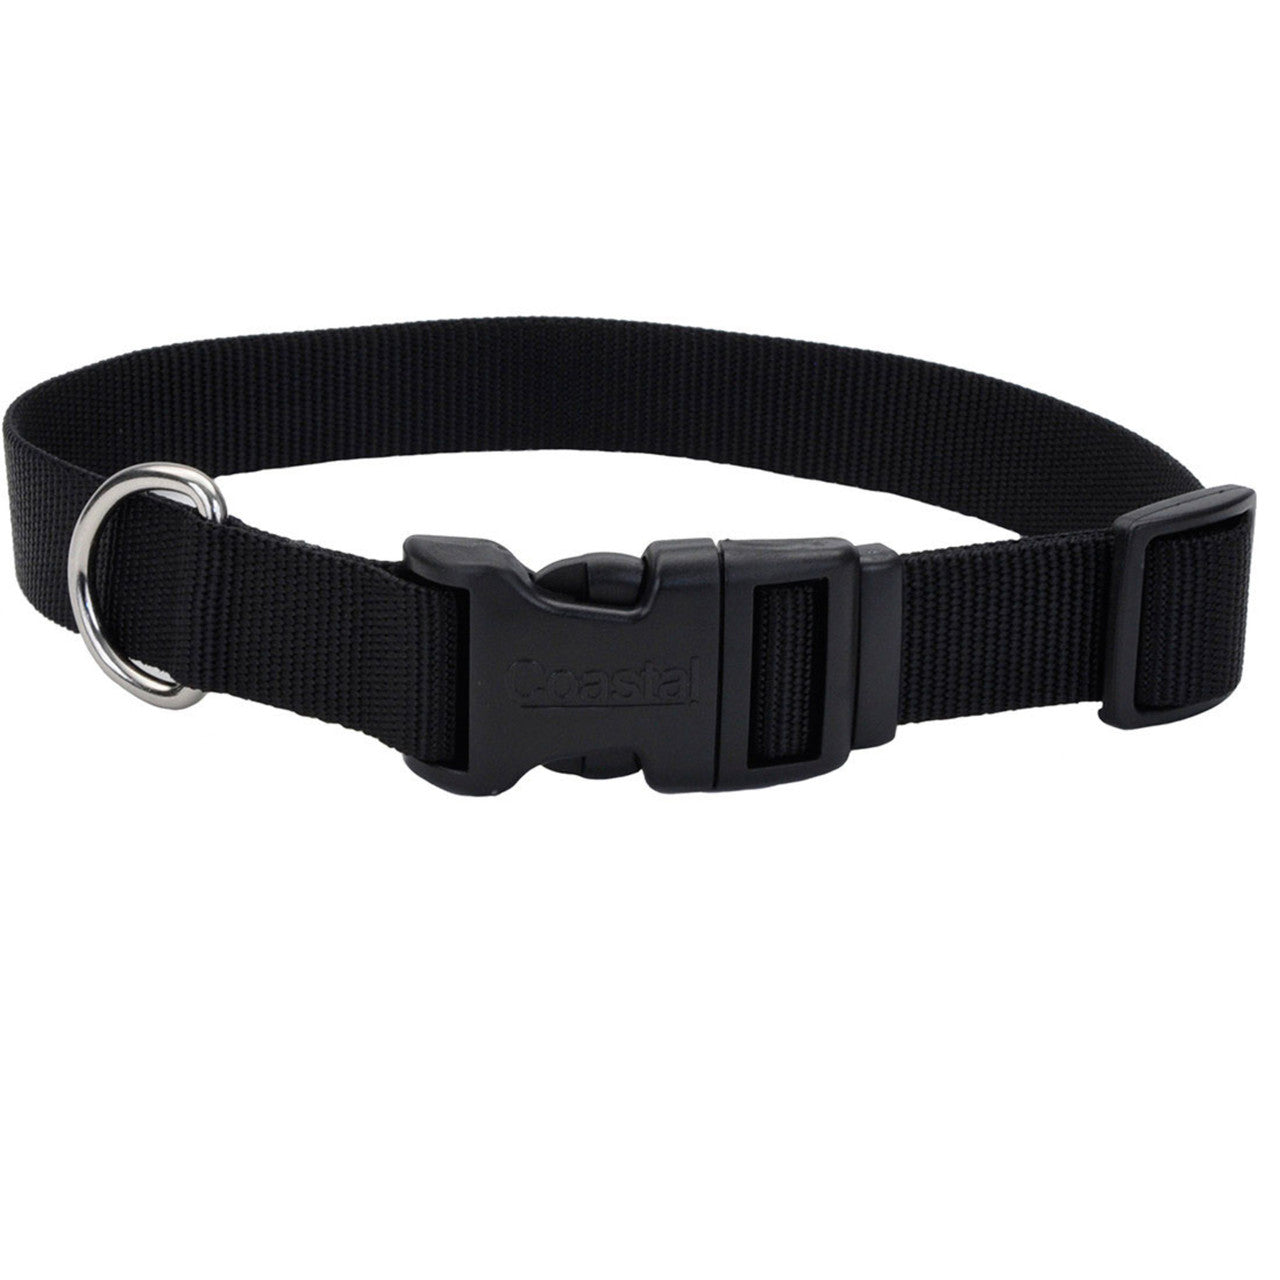 Coastal Adjustable Nylon Dog Collar with Plastic Buckle Black 5/8 in x 10-14 in